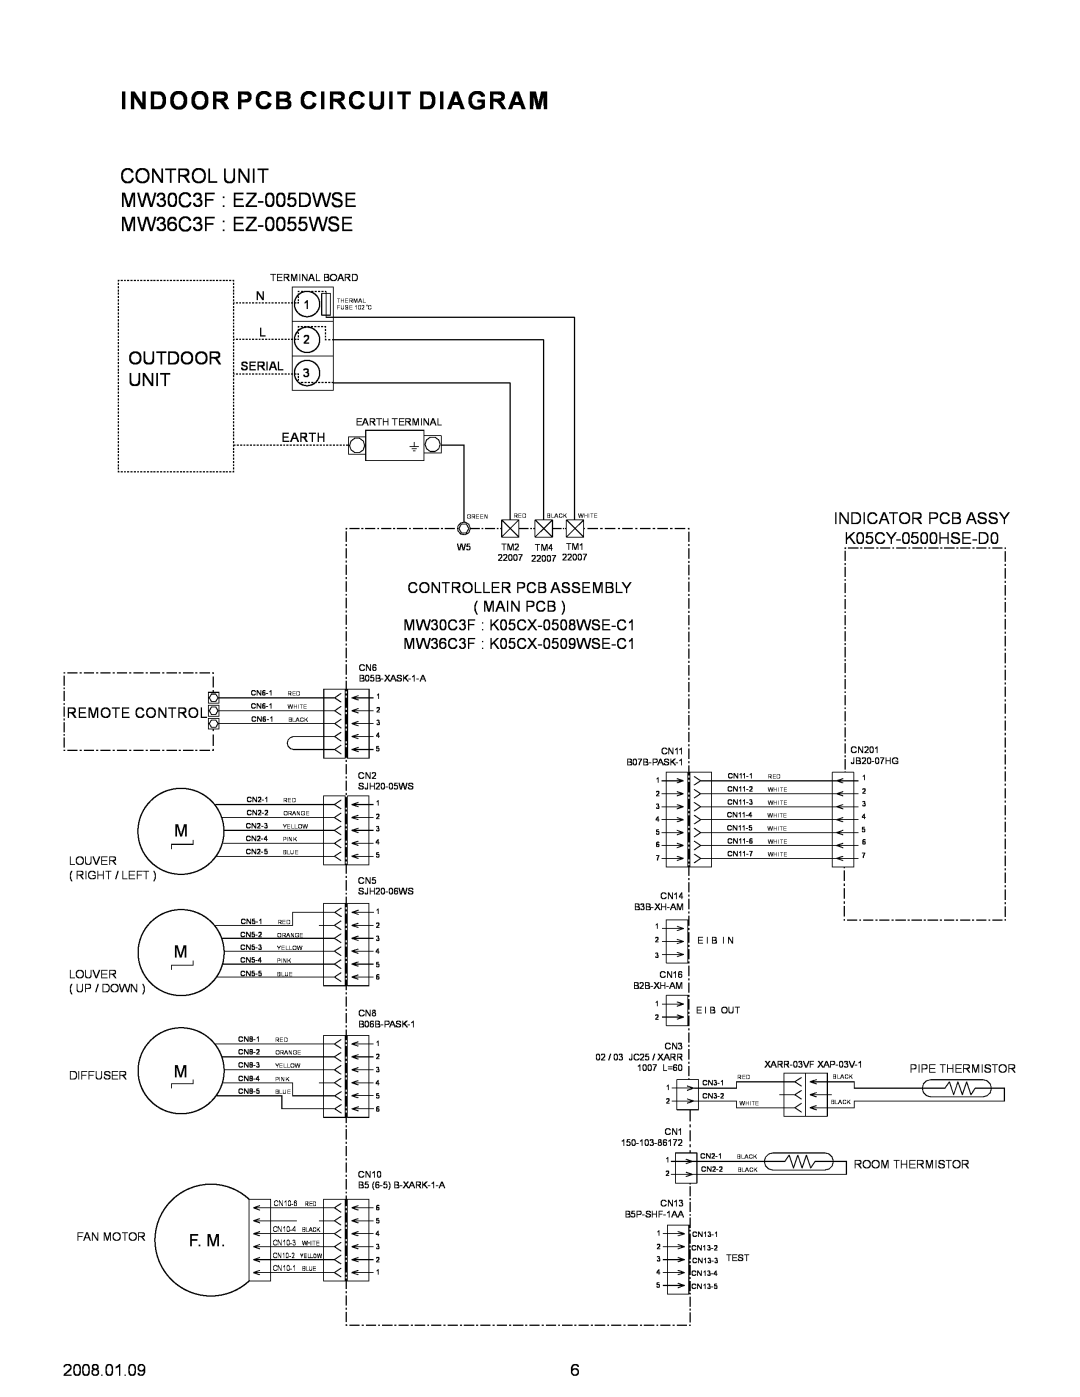 Friedrich M30CF Indoor Pcb Circuit Diagram, CONTROL UNIT MW30C3F EZ-005DWSE, MW36C3F EZ-0055WSE, Outdoor, Unit, F. M 